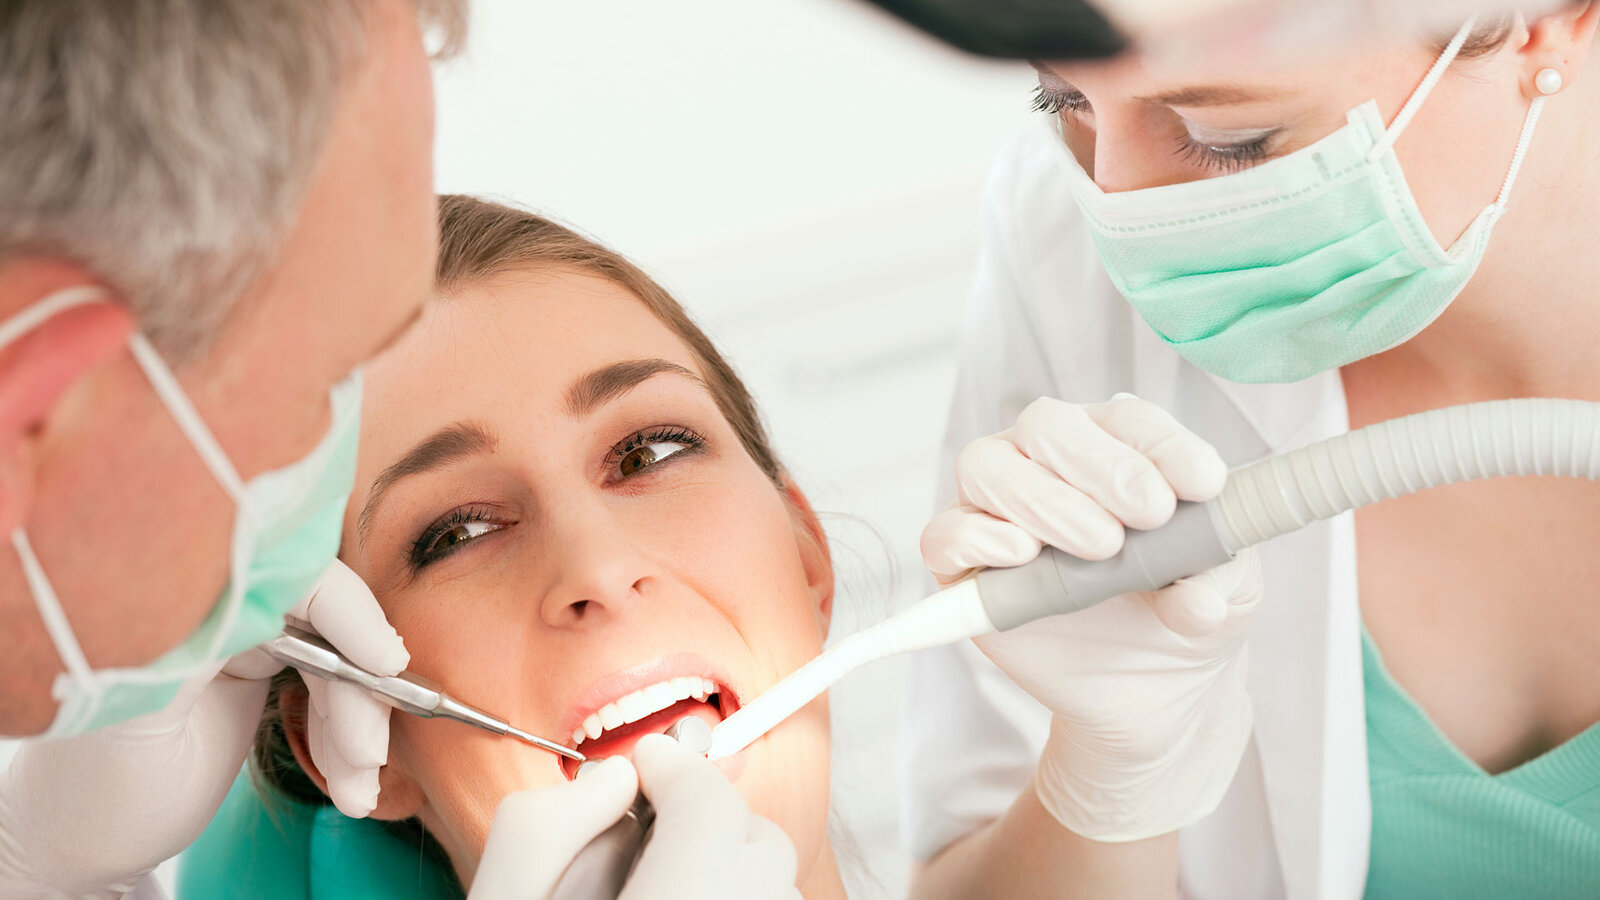 Behandlung beim Zahnarzt ©adobestock/Kzenon 